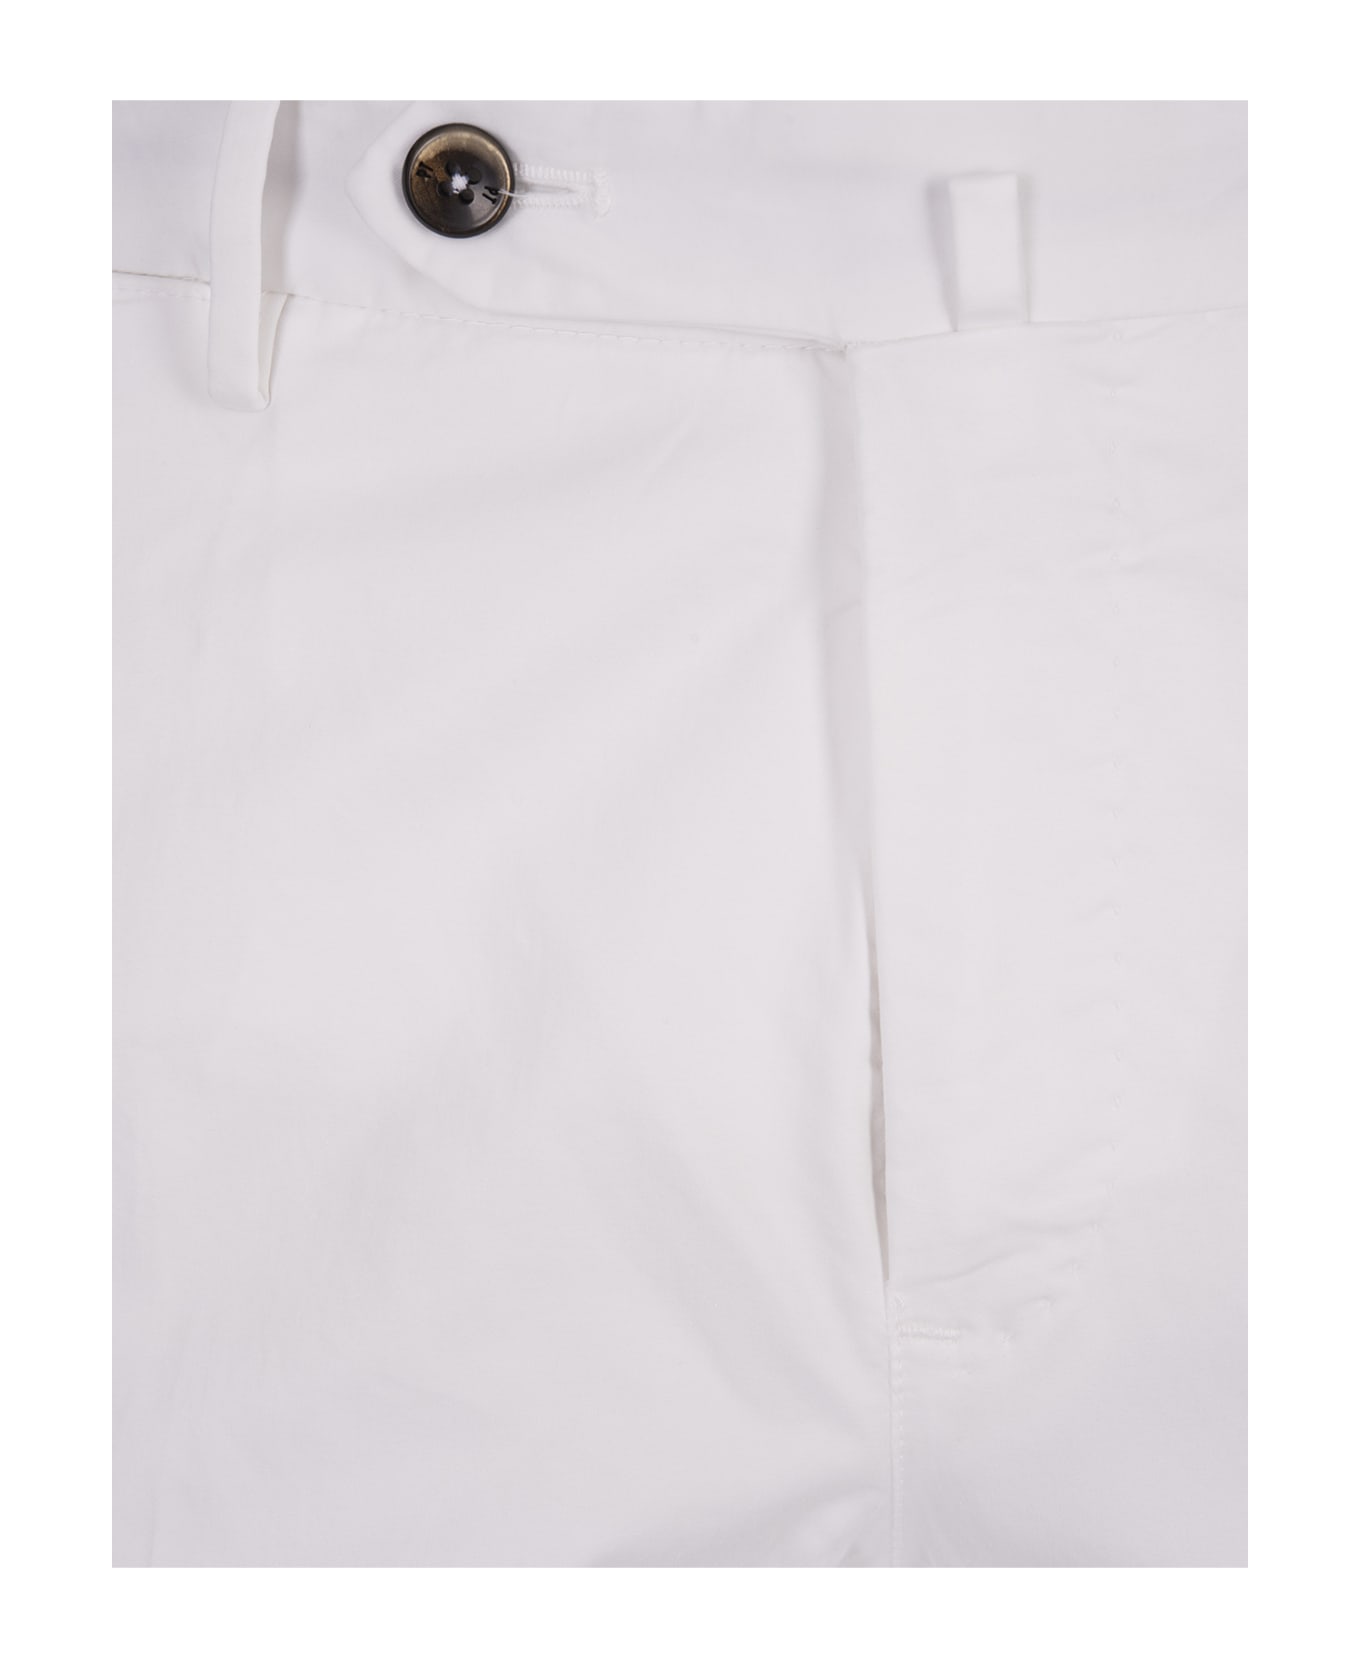 PT Torino White Stretch Cotton Classic Trousers - White